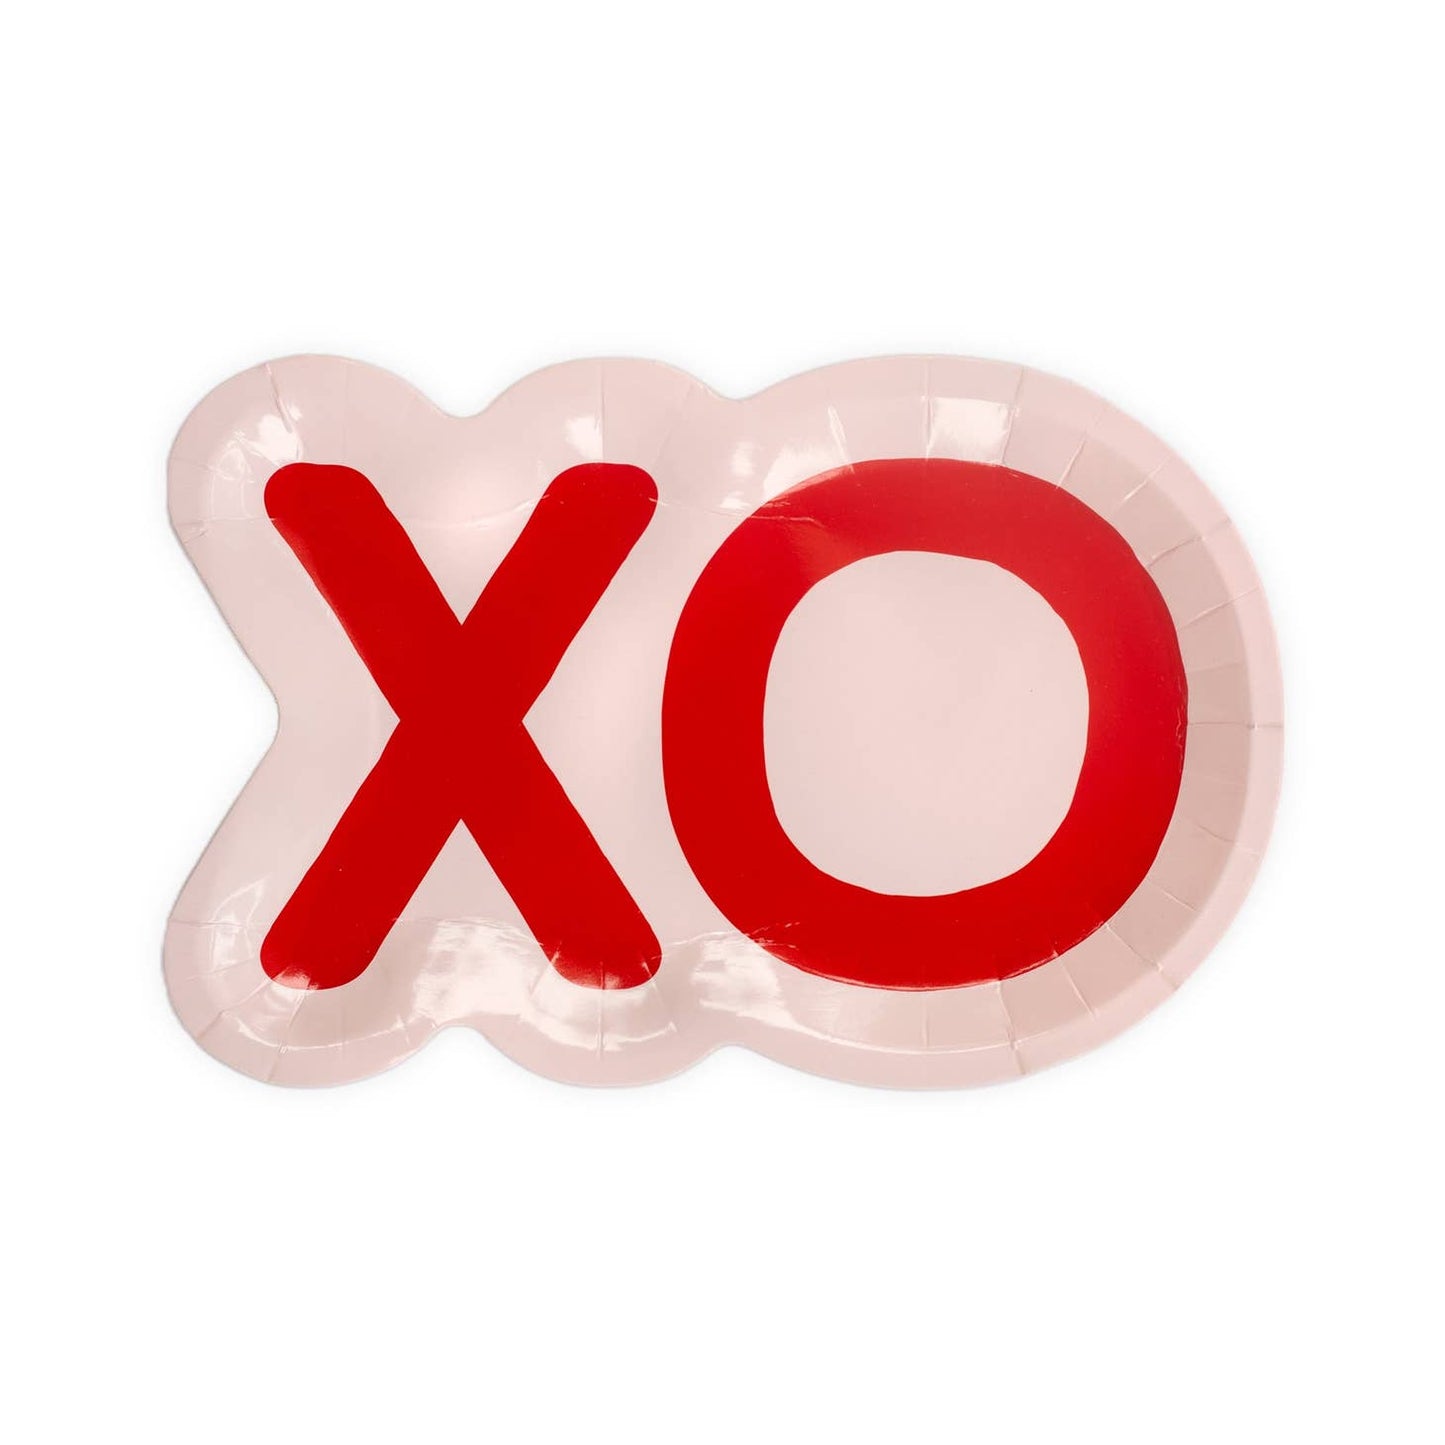 XOXO Shaped Plates